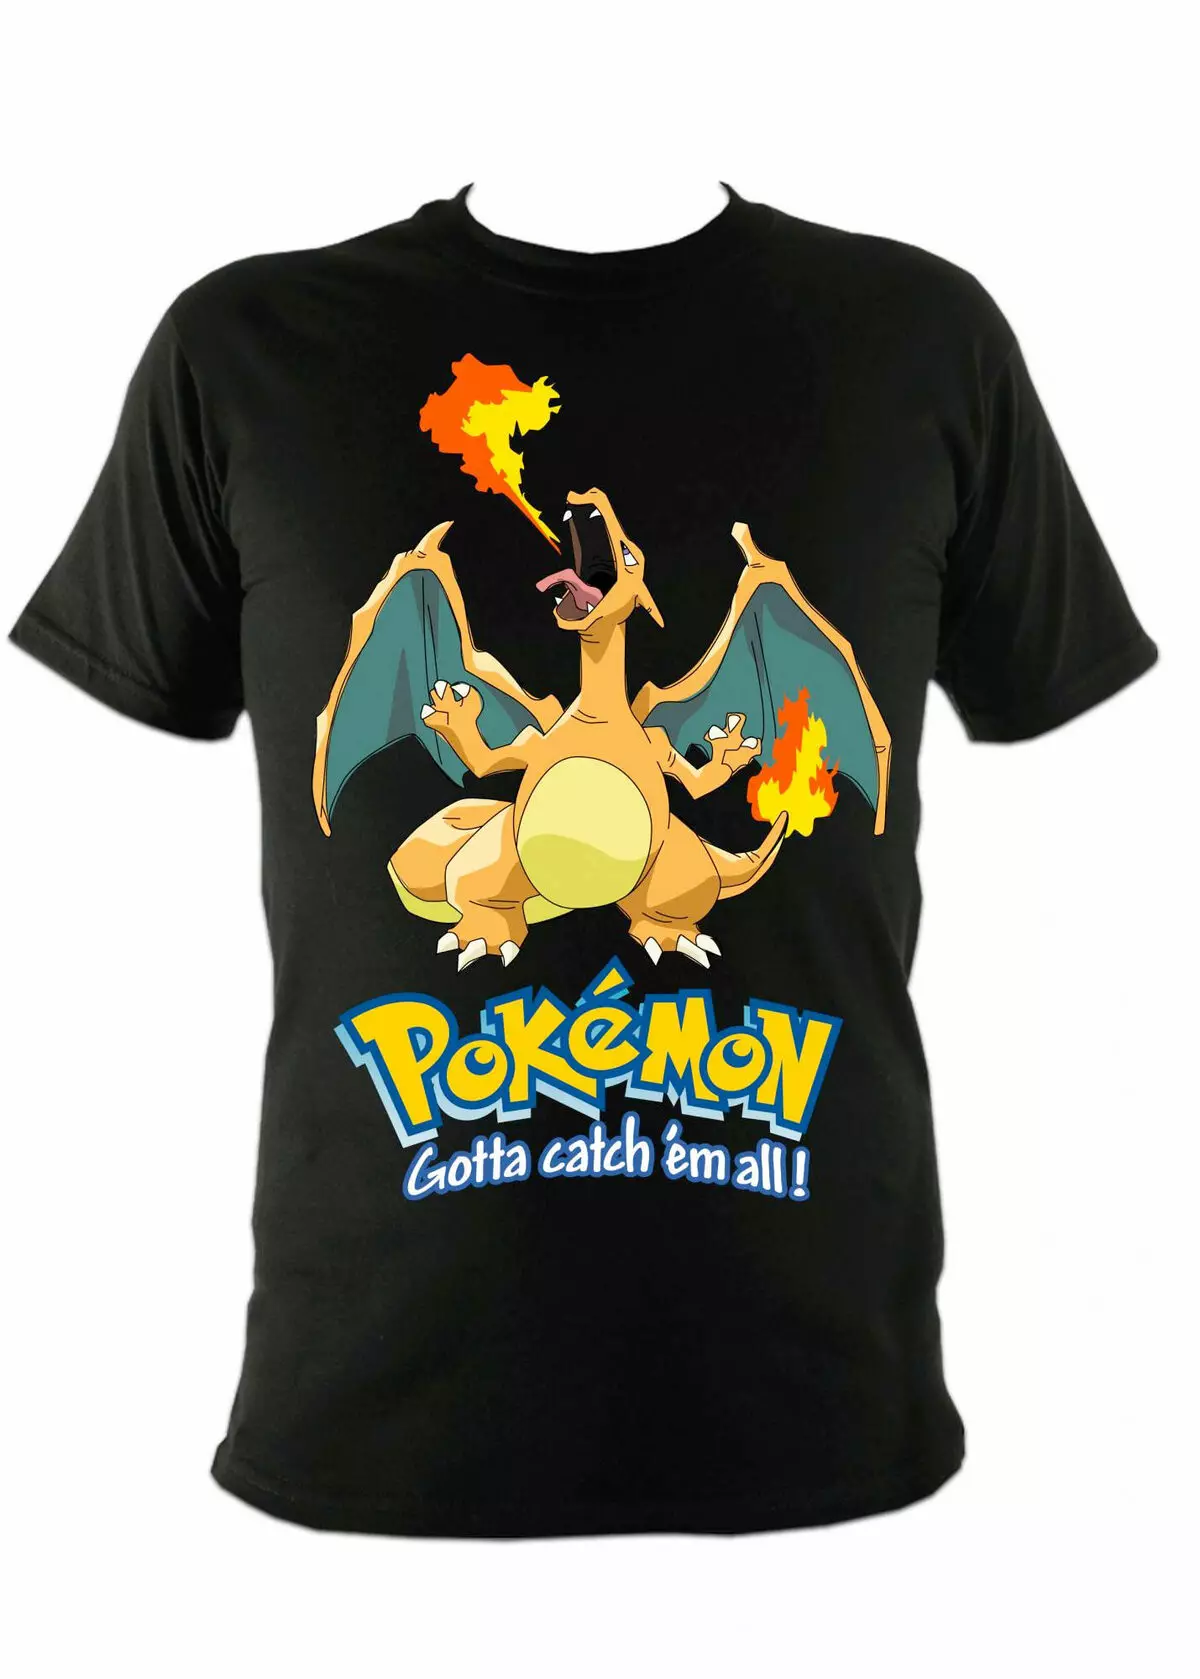 Camisetas con Pokémonas (62 fotos) 14565_58